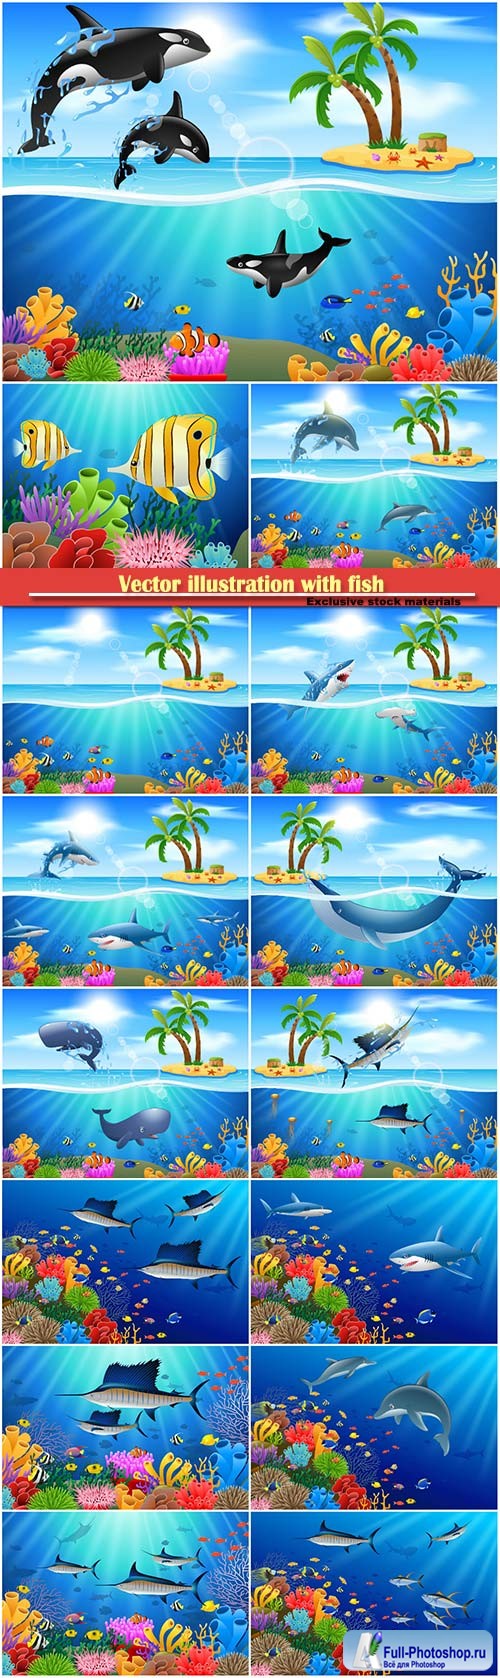 Underwater world, vector illustration with fish